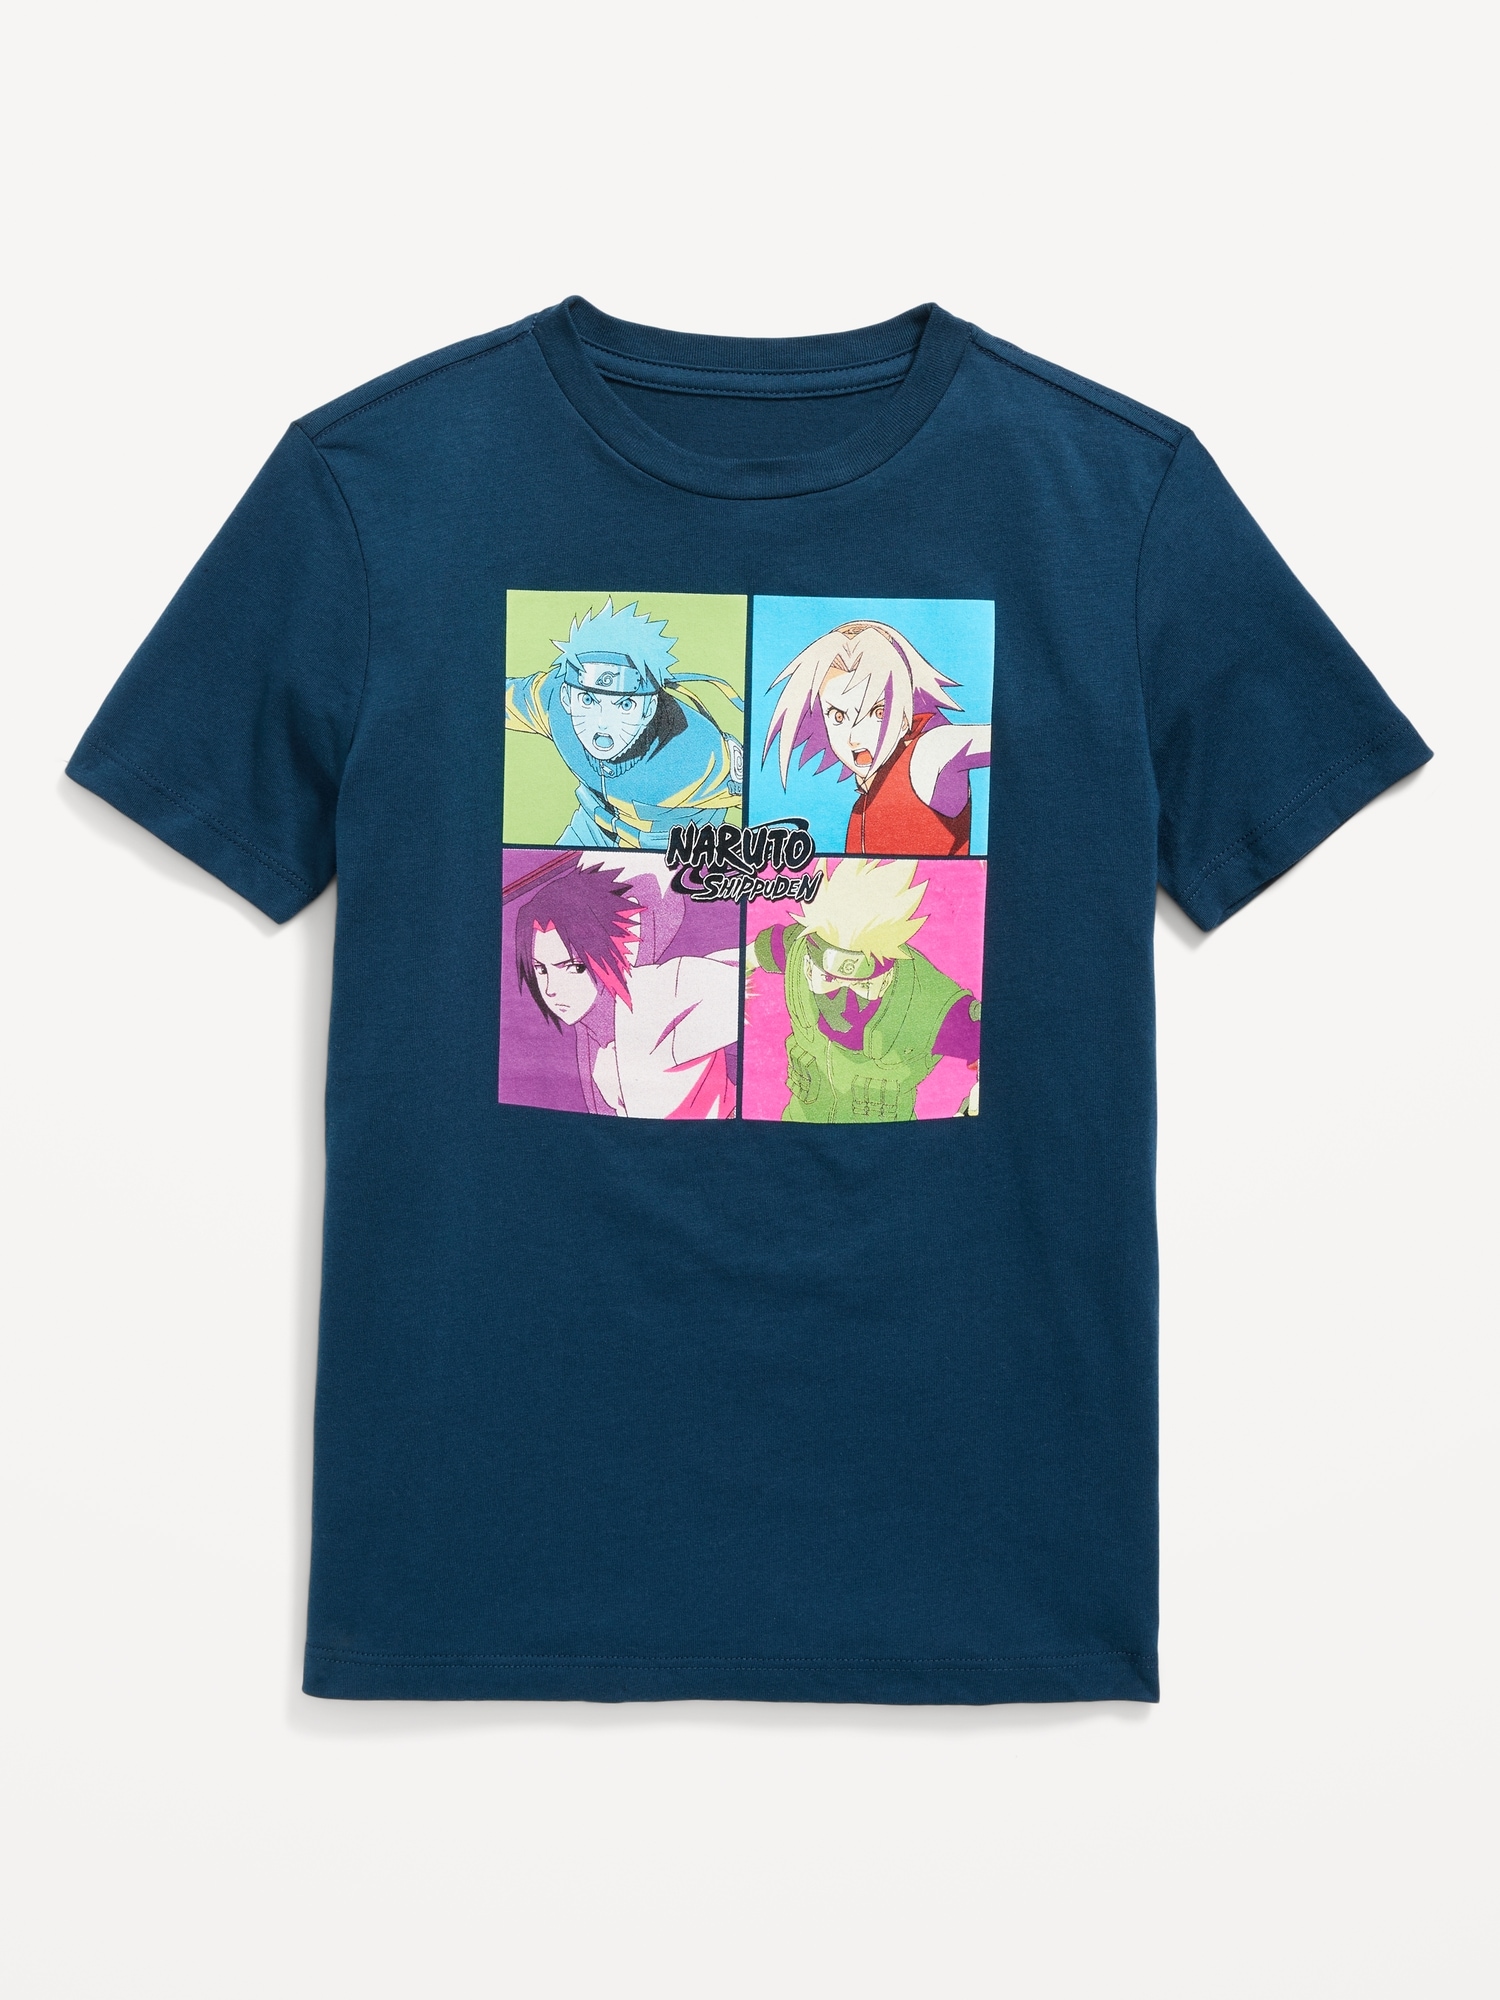 Anime Shirt For Teen Girls Anime Merch Girl outfit' Men's T-Shirt |  Spreadshirt